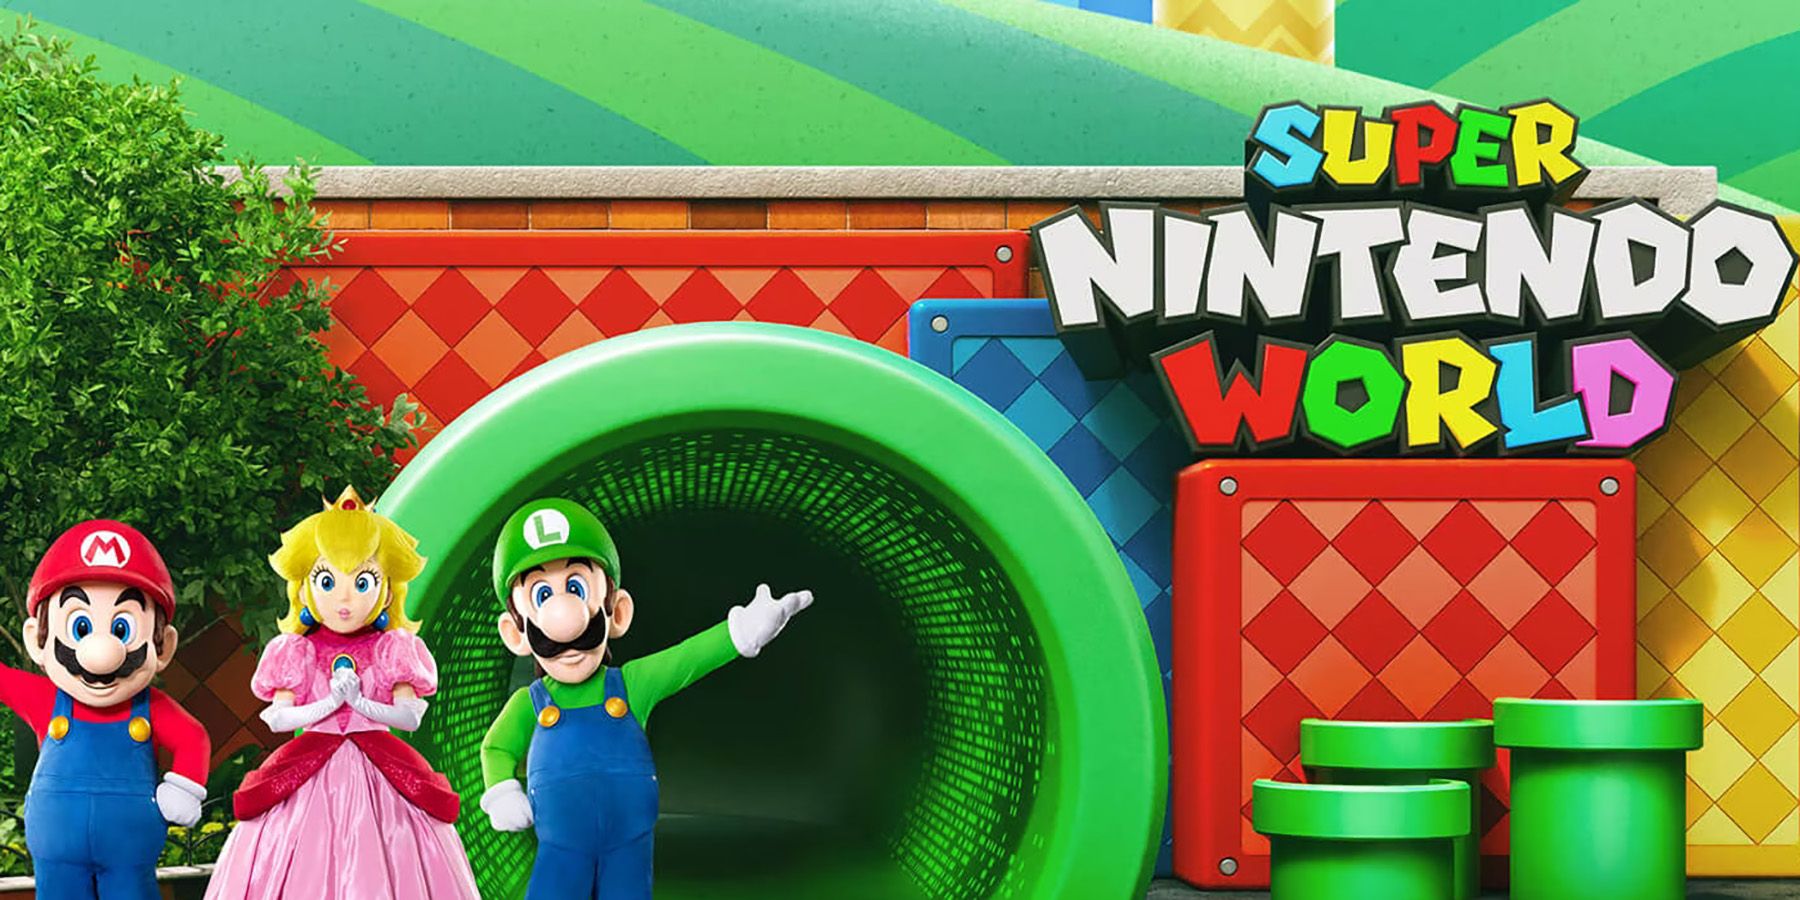 Promotional image for Super Nintendo World Hollywood